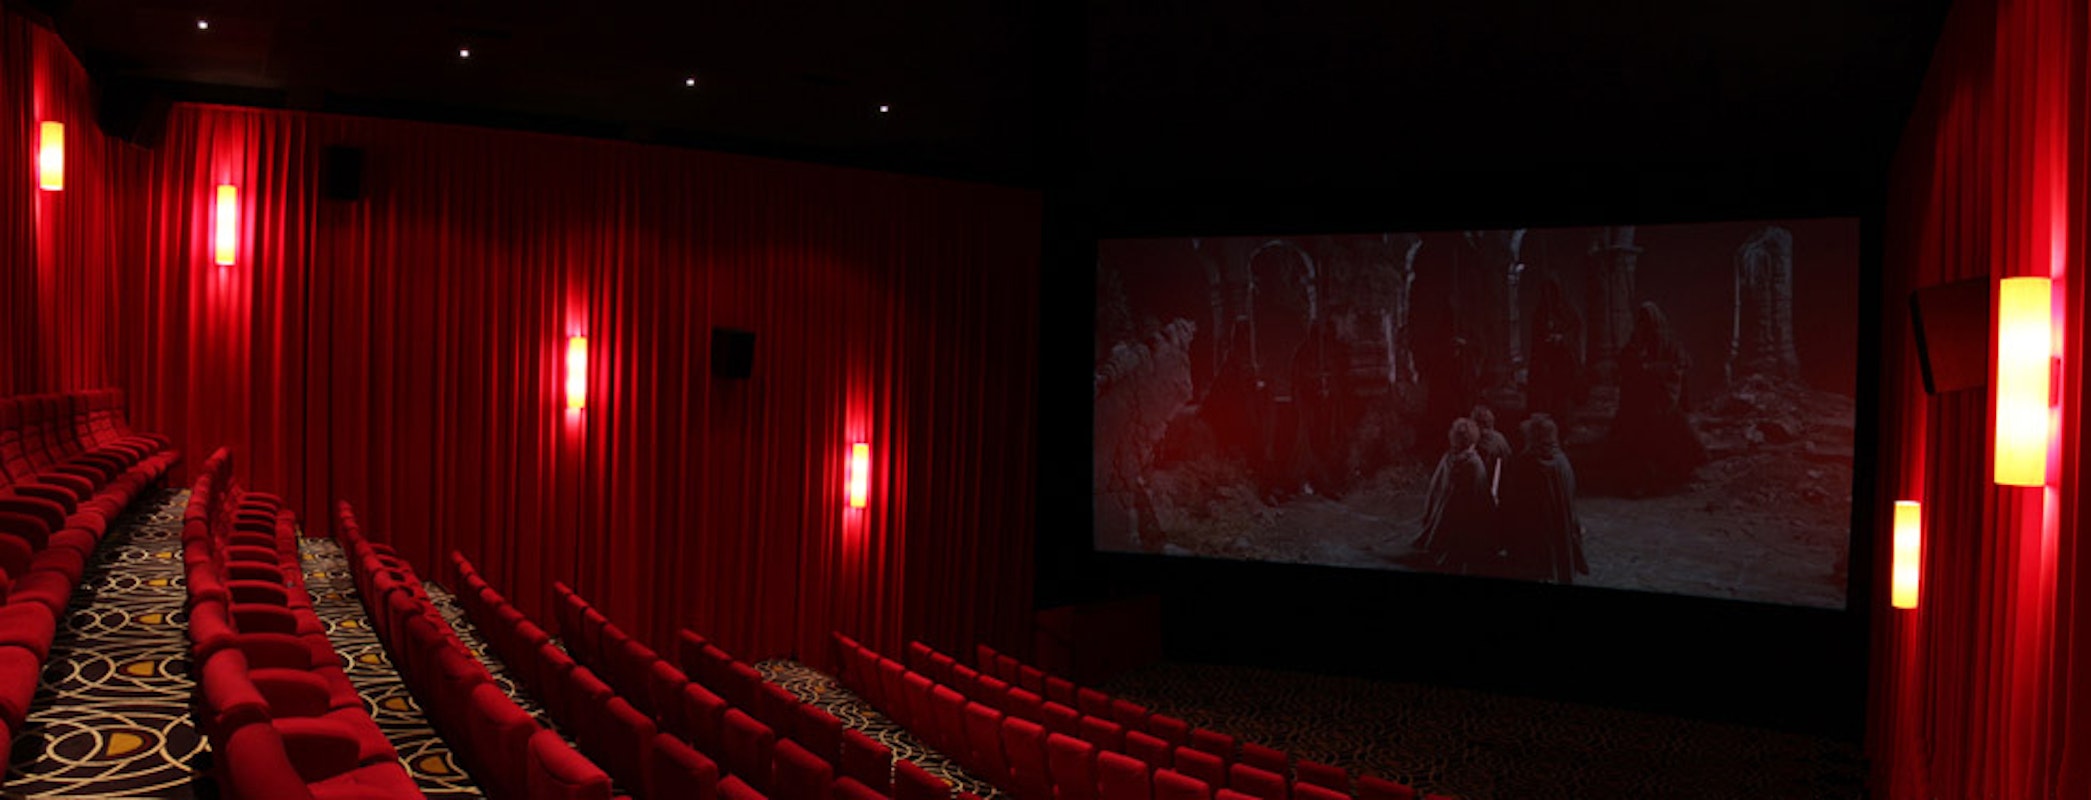 29.01.15 - State Cinema Refurbishment, Nelson